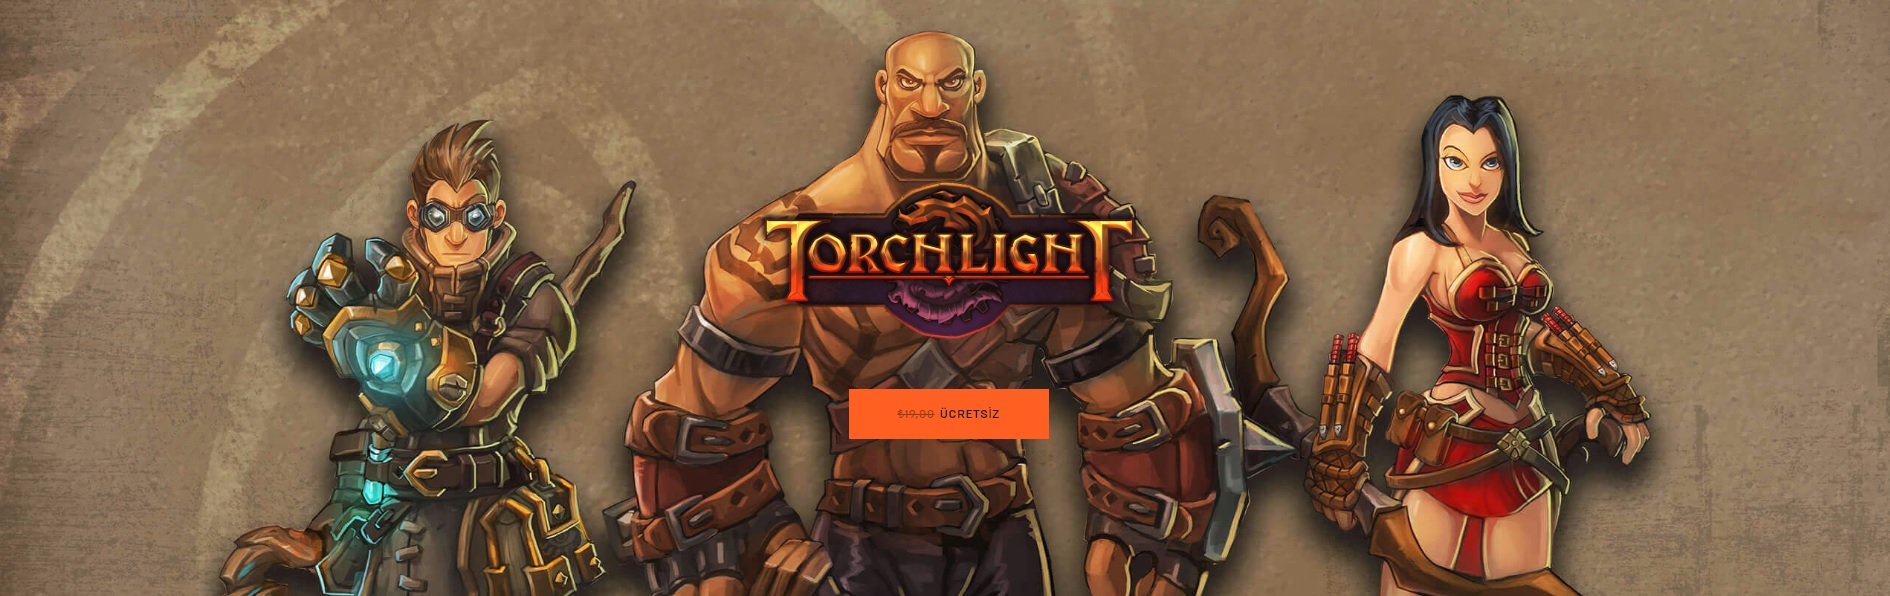 Epic Games'in Bu Haftaki Ücretsiz Oyunu 'Torchlight' Oldu